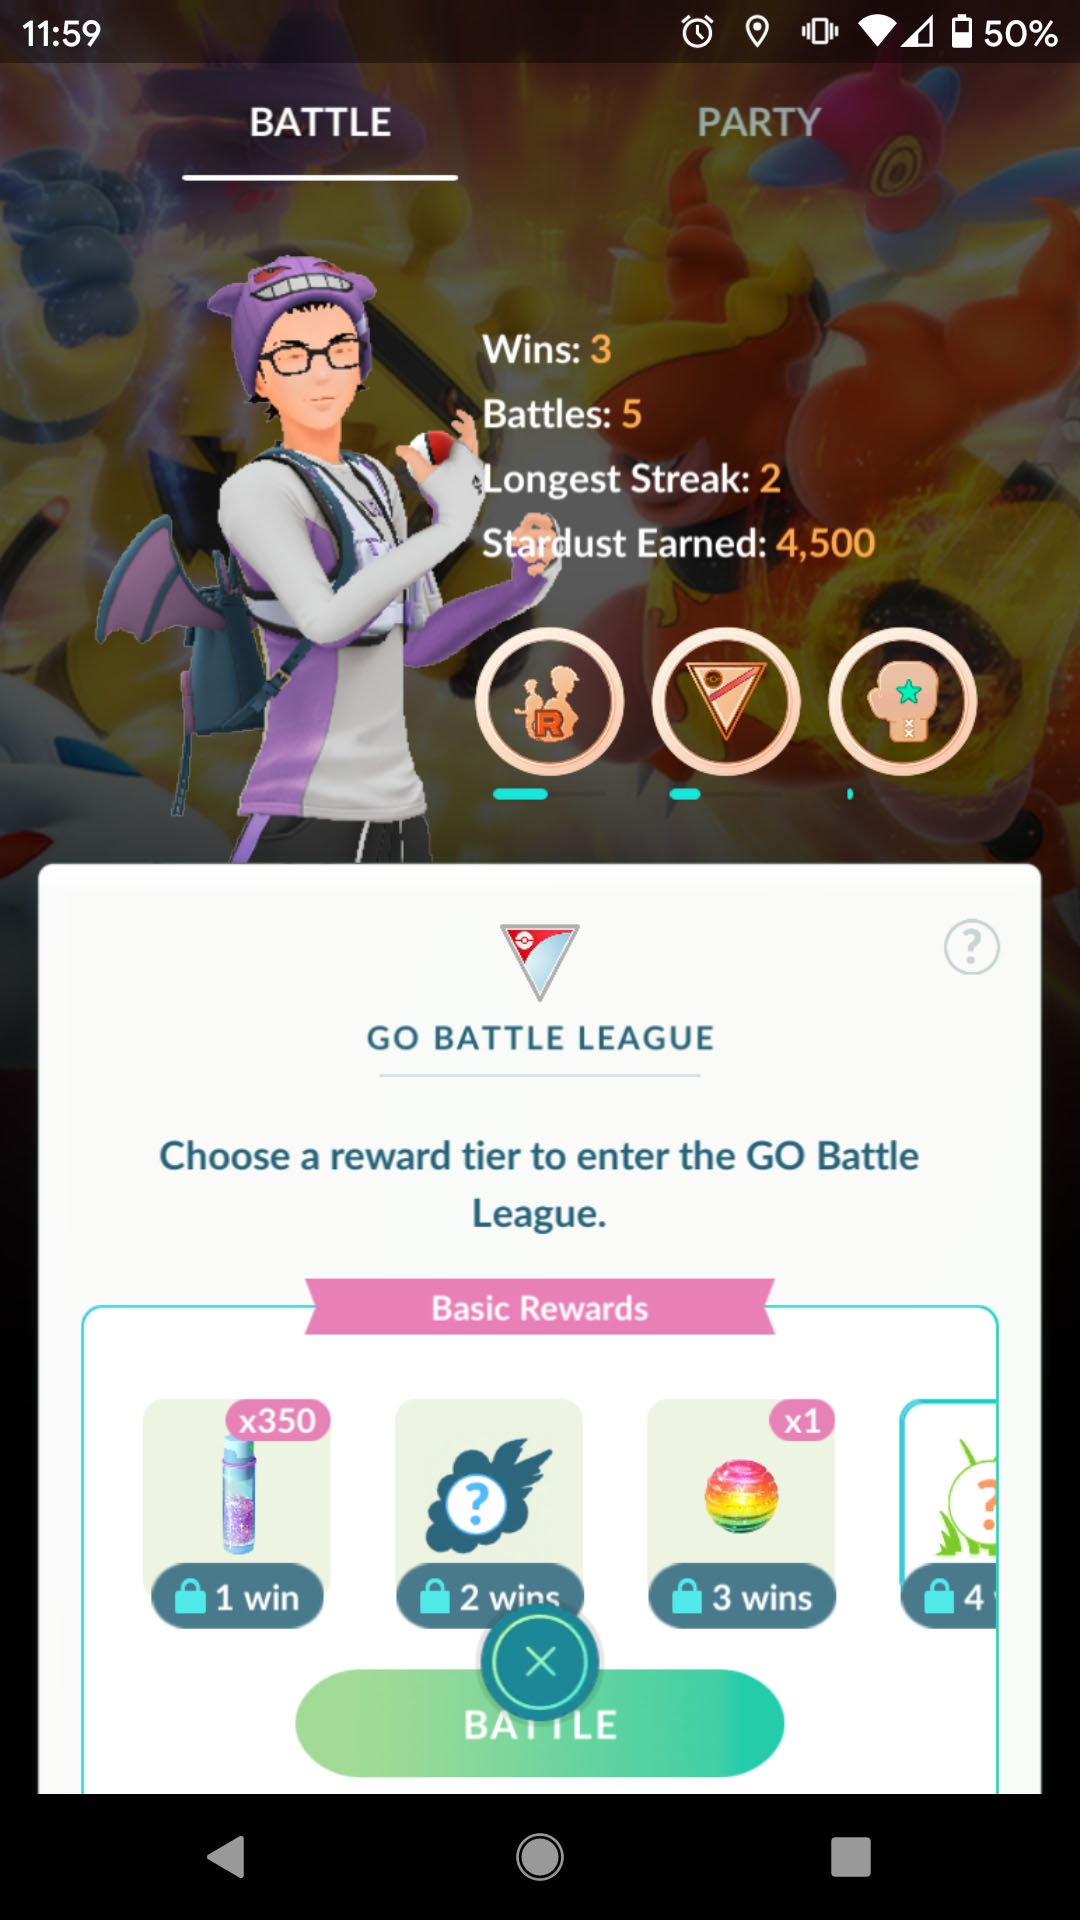 SHINY SPIRITOMB-LEAD SPICE TEAM WIN STREAK!, Pokémon GO Battle League